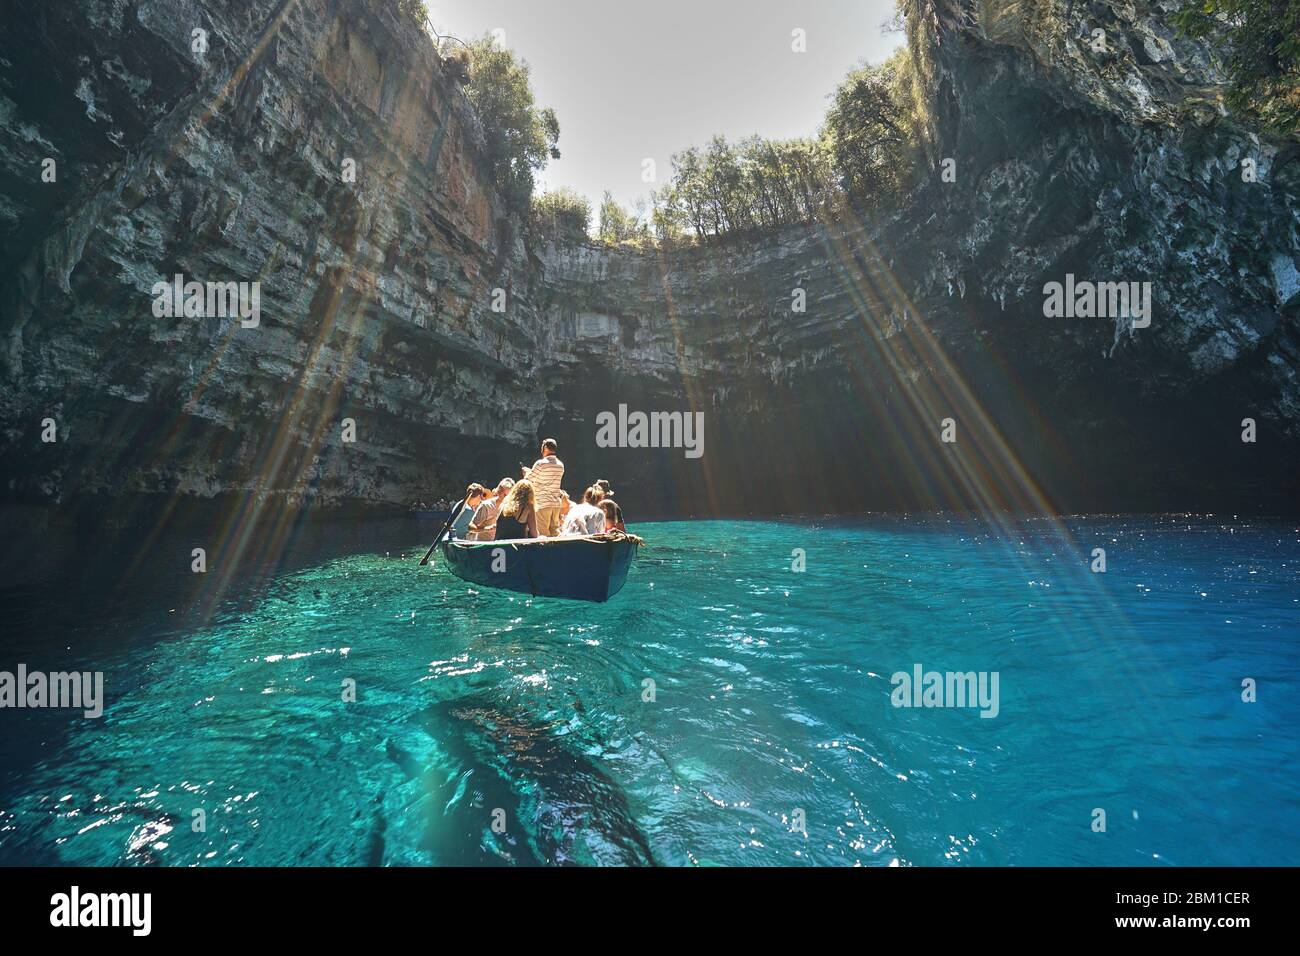 Boats in Melissani Cave / Lake in Kefalonia Island (Cephalonia), Ionian Sea, Greece Stock Photo